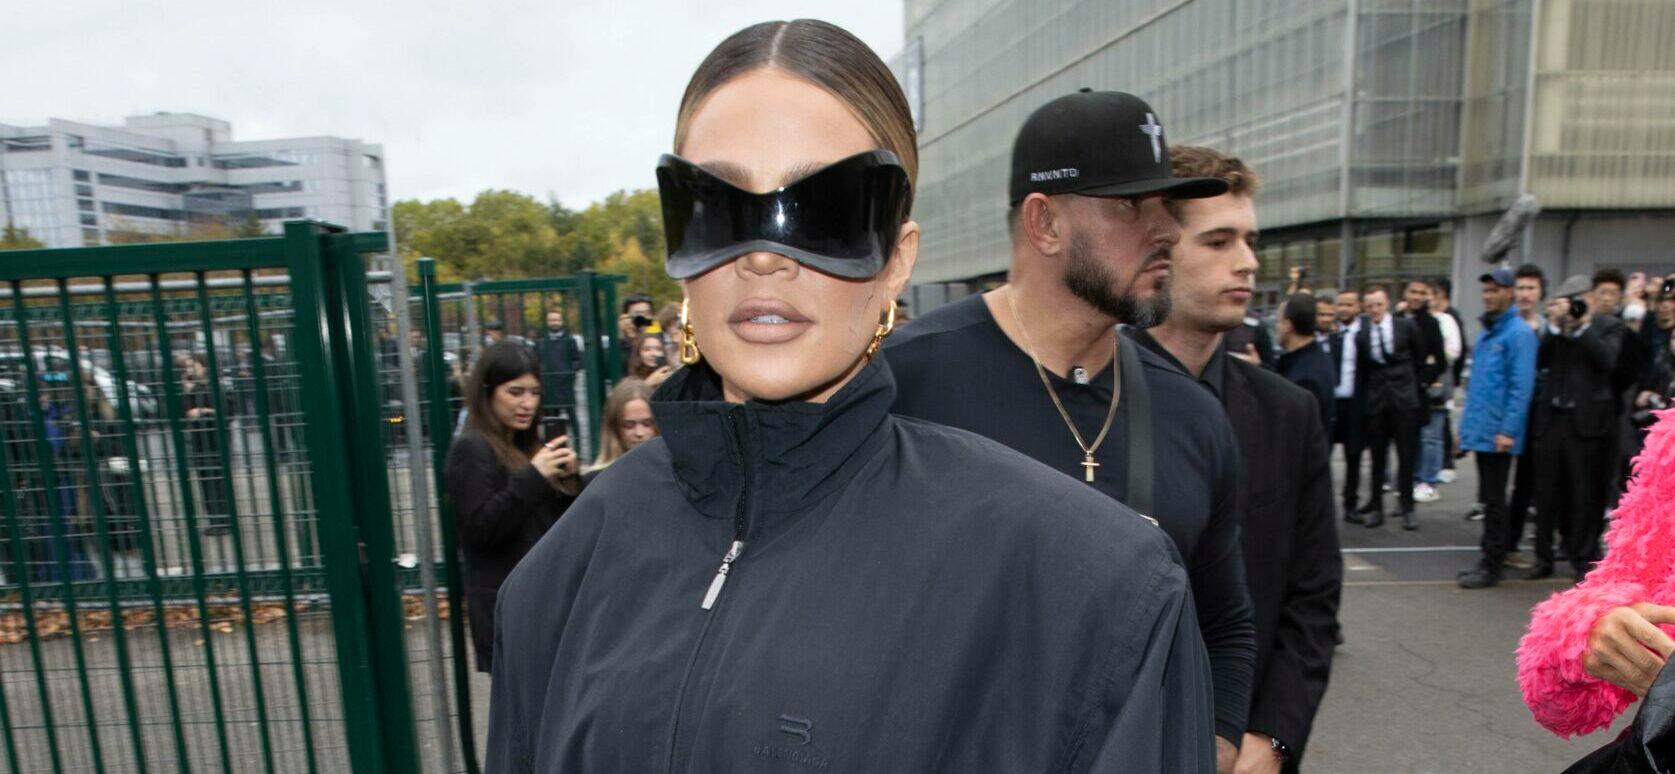 Khloe Kardashian shows off her striking figure in Balenciaga while in Paris